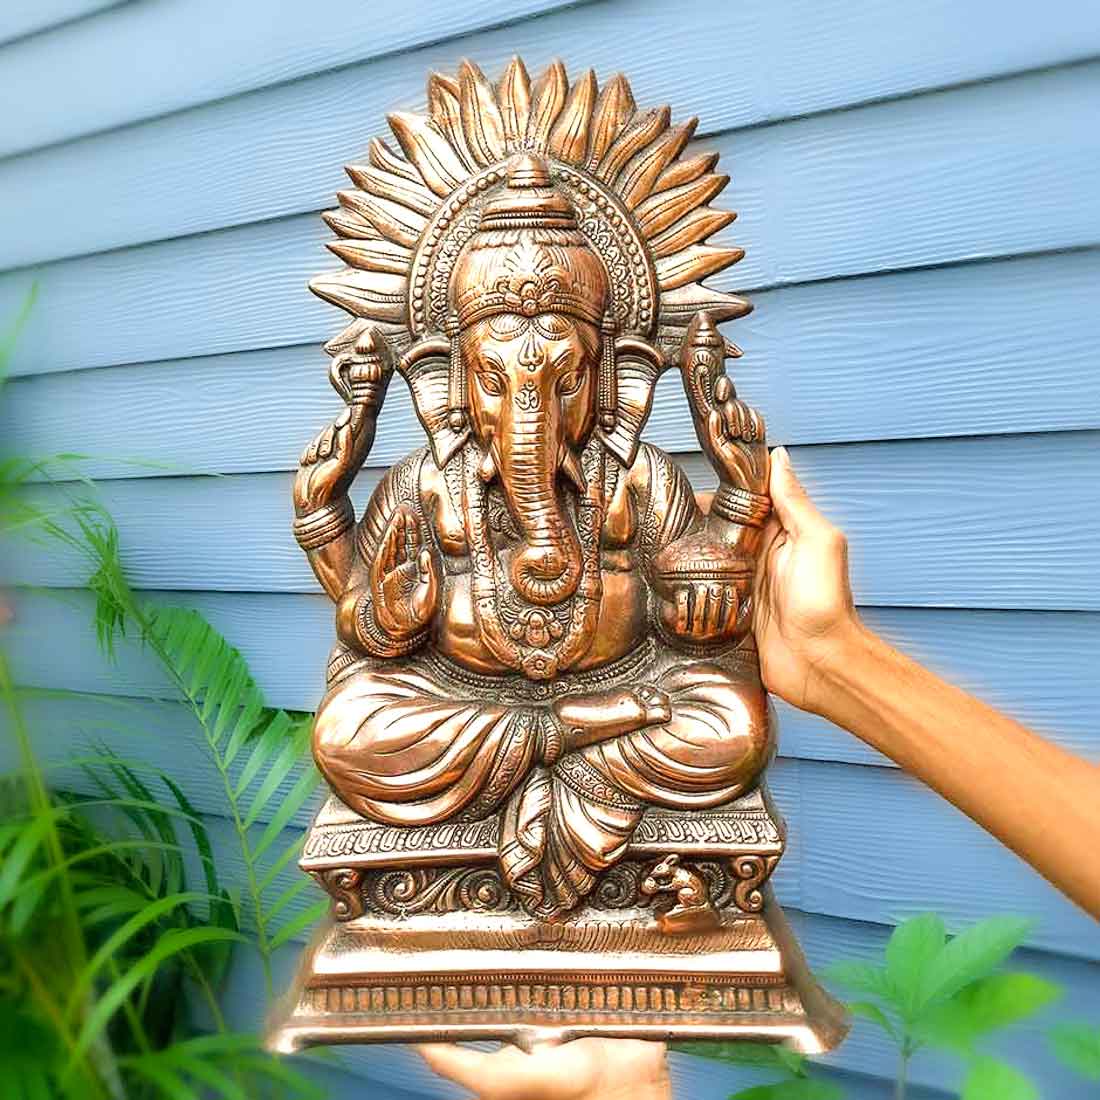 Ganesh Wall Hanging Idol Big | Lord Ganesha Statue Wall Art - For Puja, Home & Main Gate |Religoius & Spiritual Decor for Living Room - 23 Inch